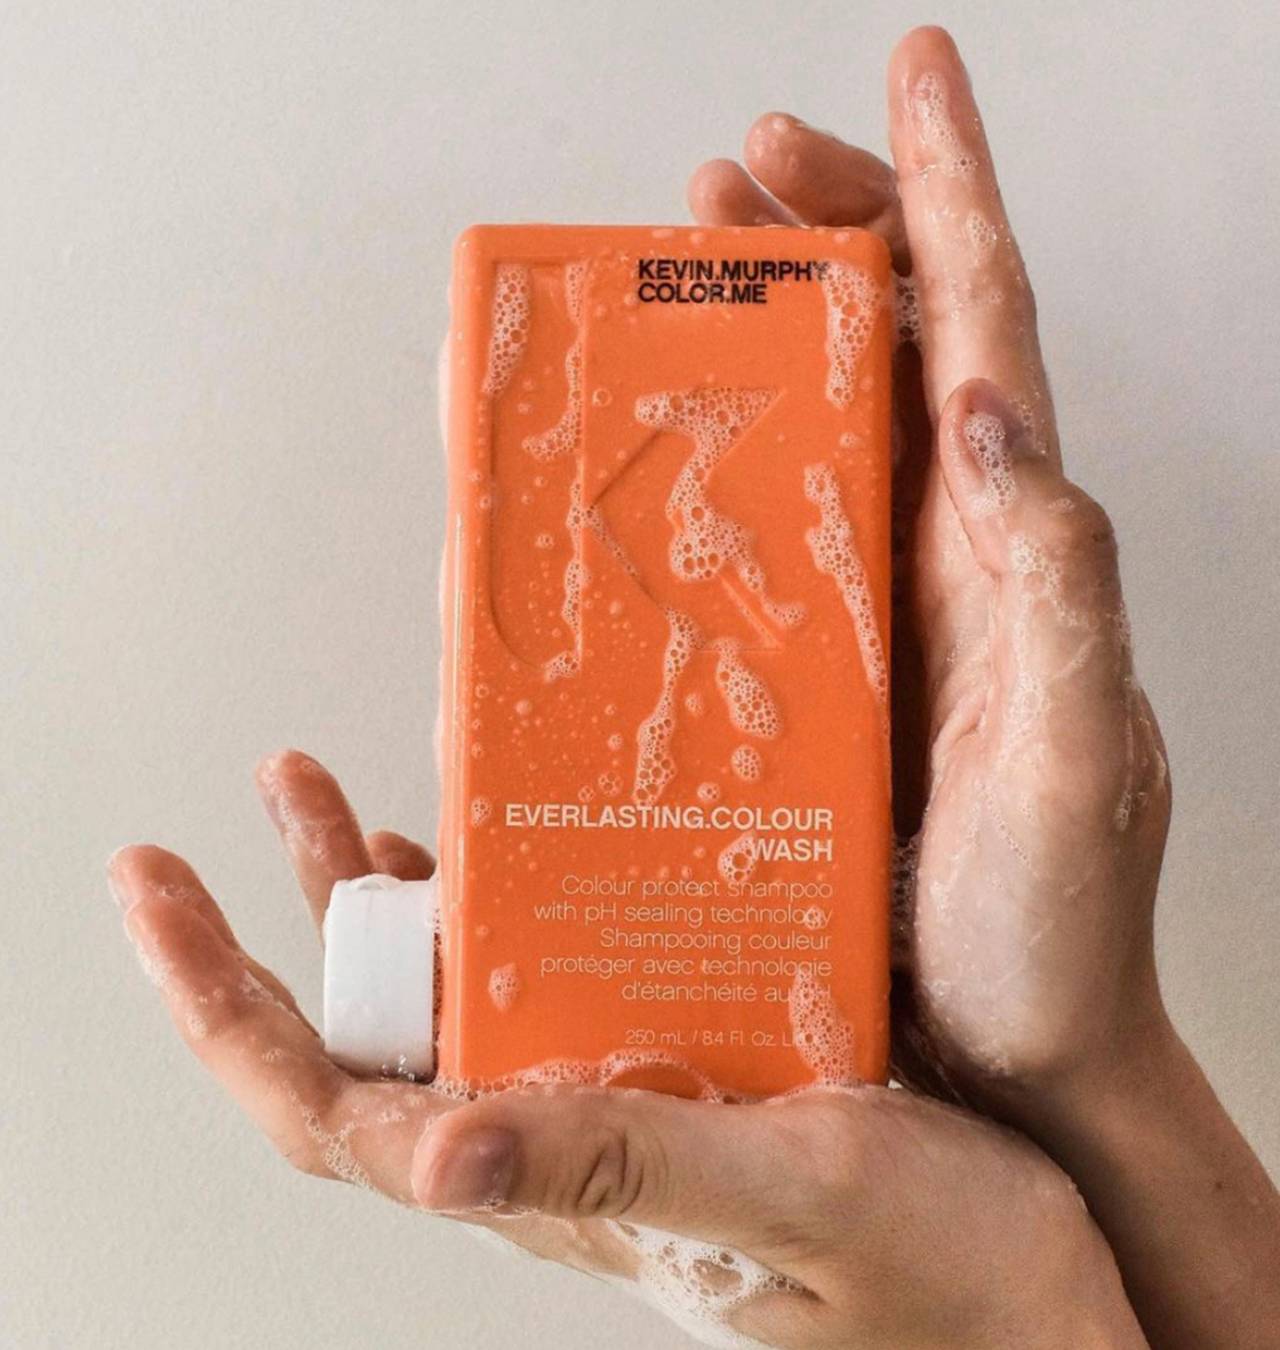 hands with soap sudds holding orange shampoo bottle